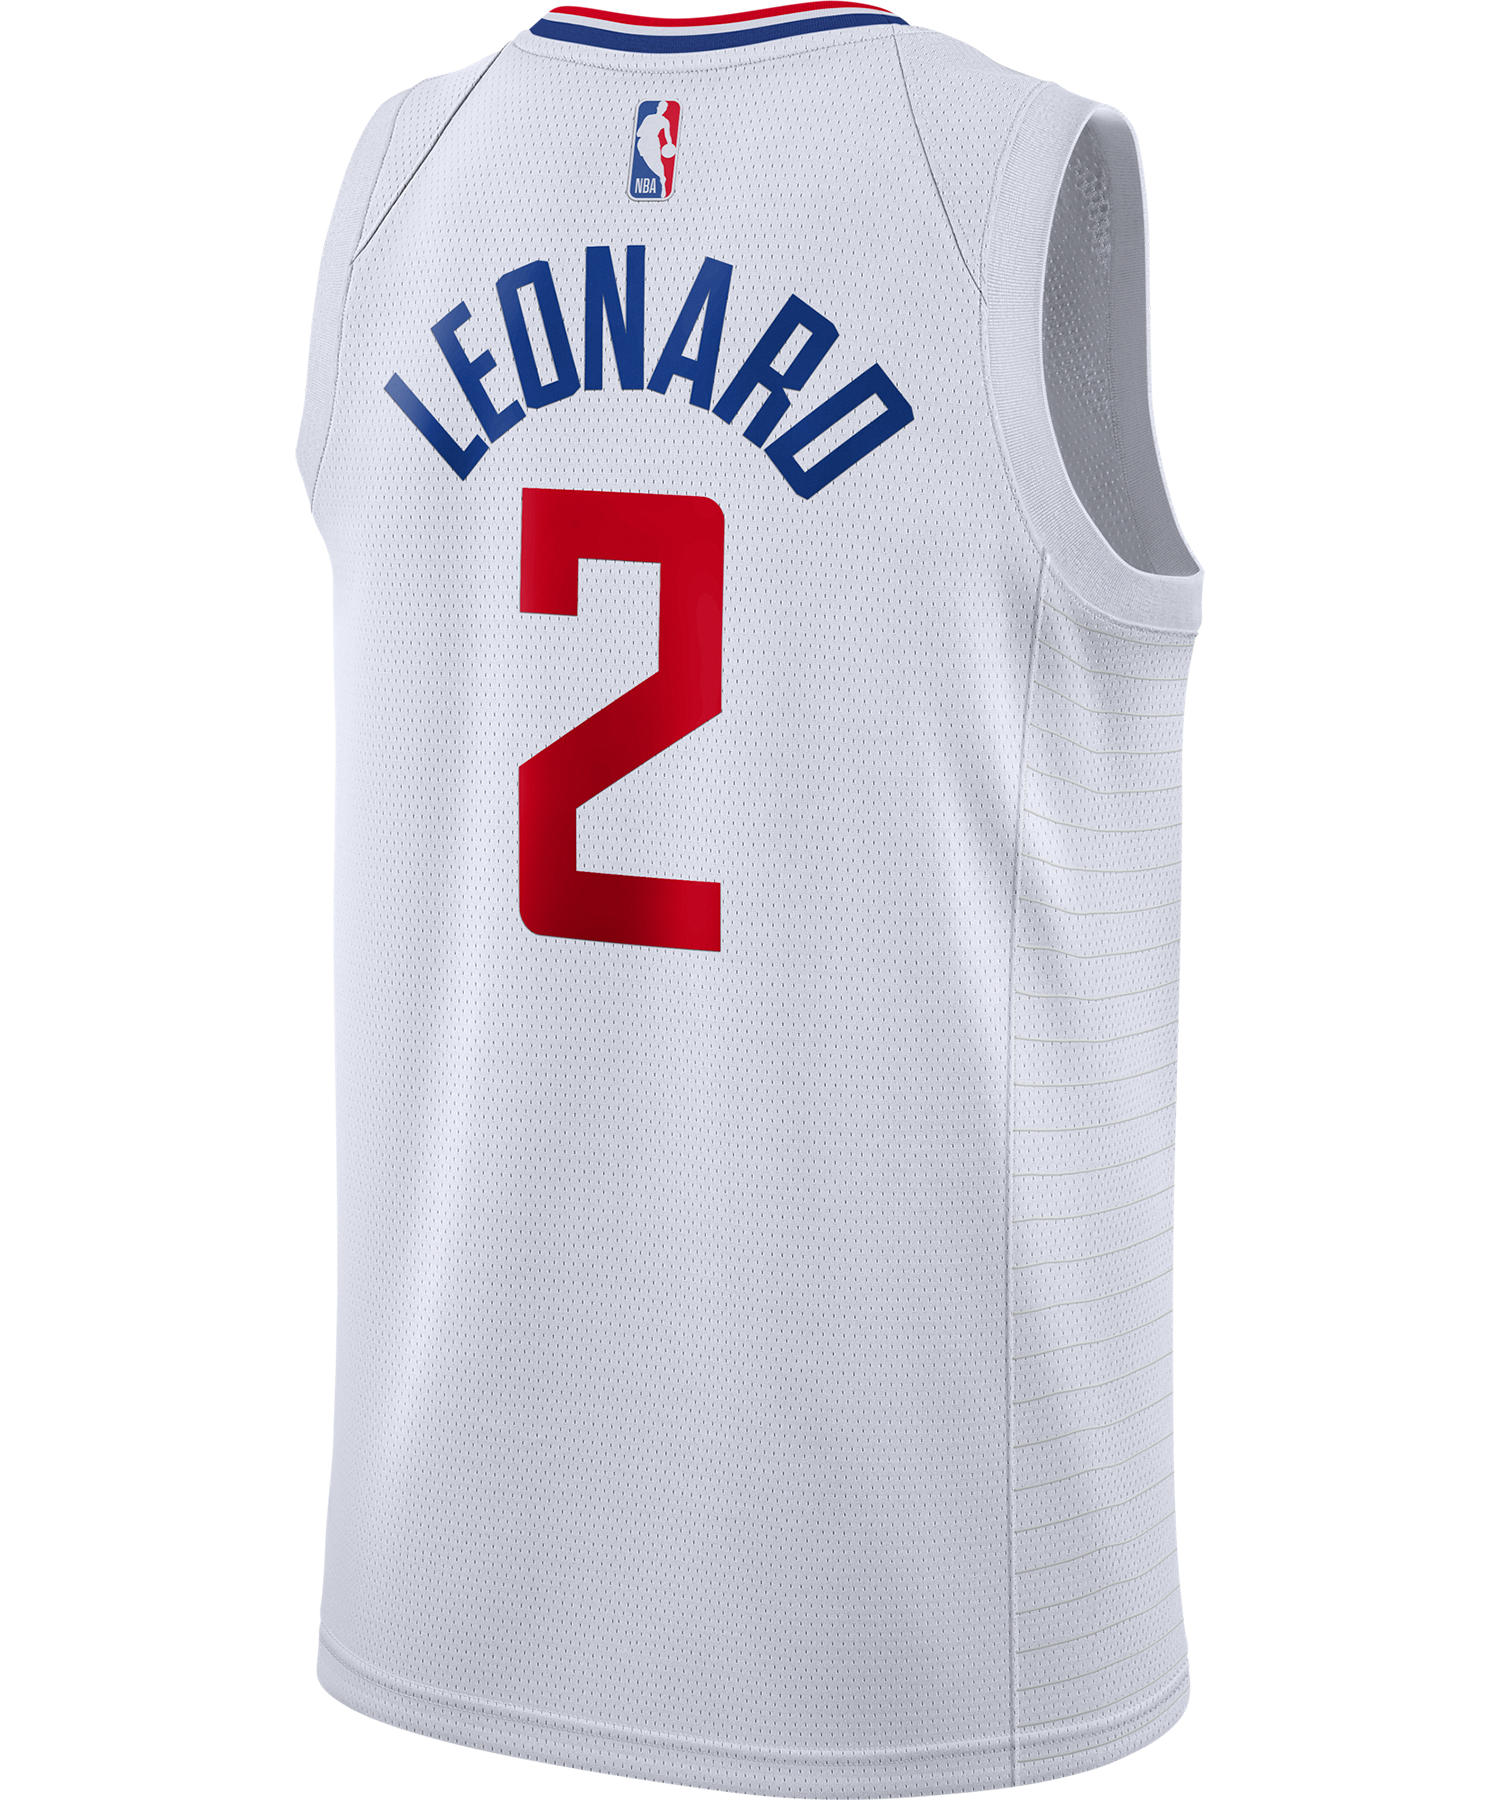 Kawhi Leonard LA Clippers Nike 